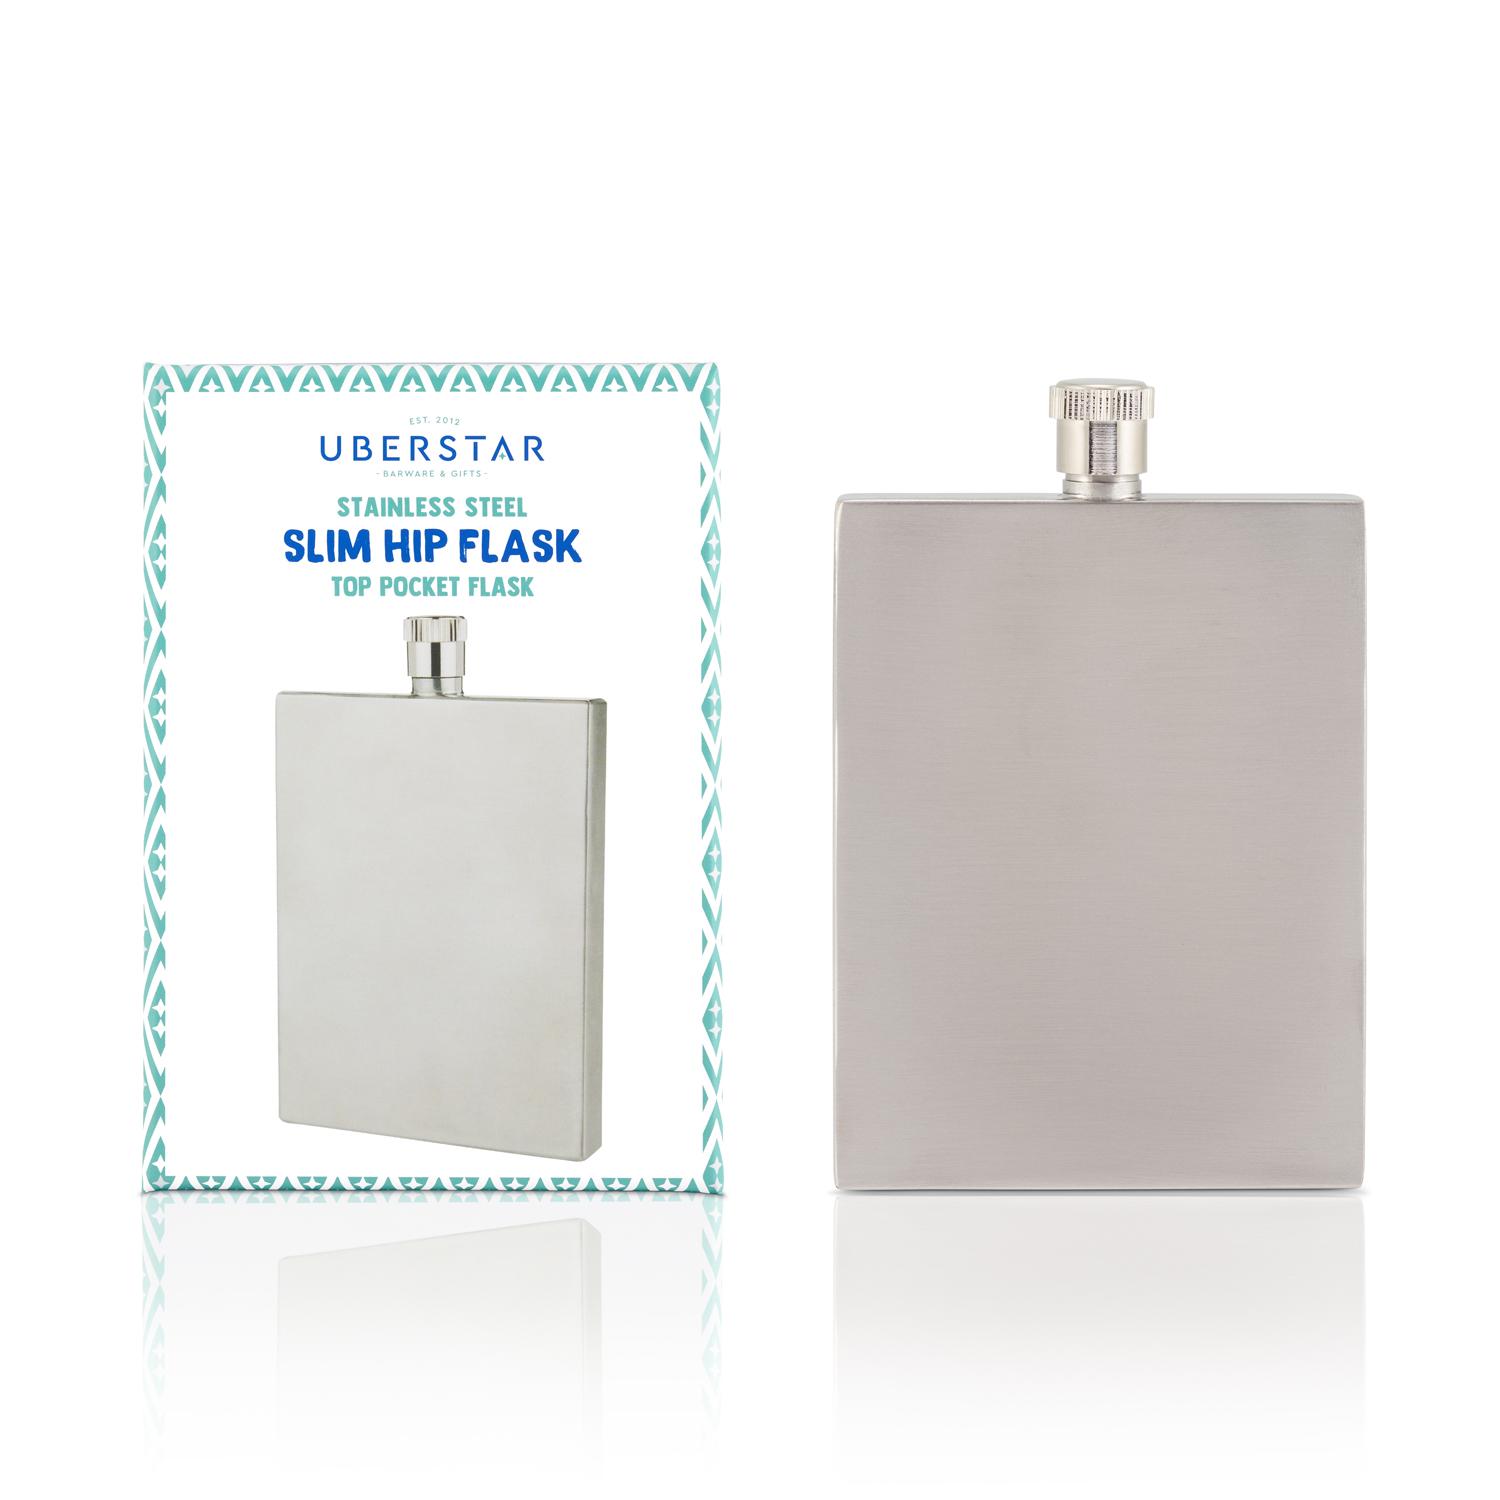 Uberstar Slim Hip Flask - Only £14.99